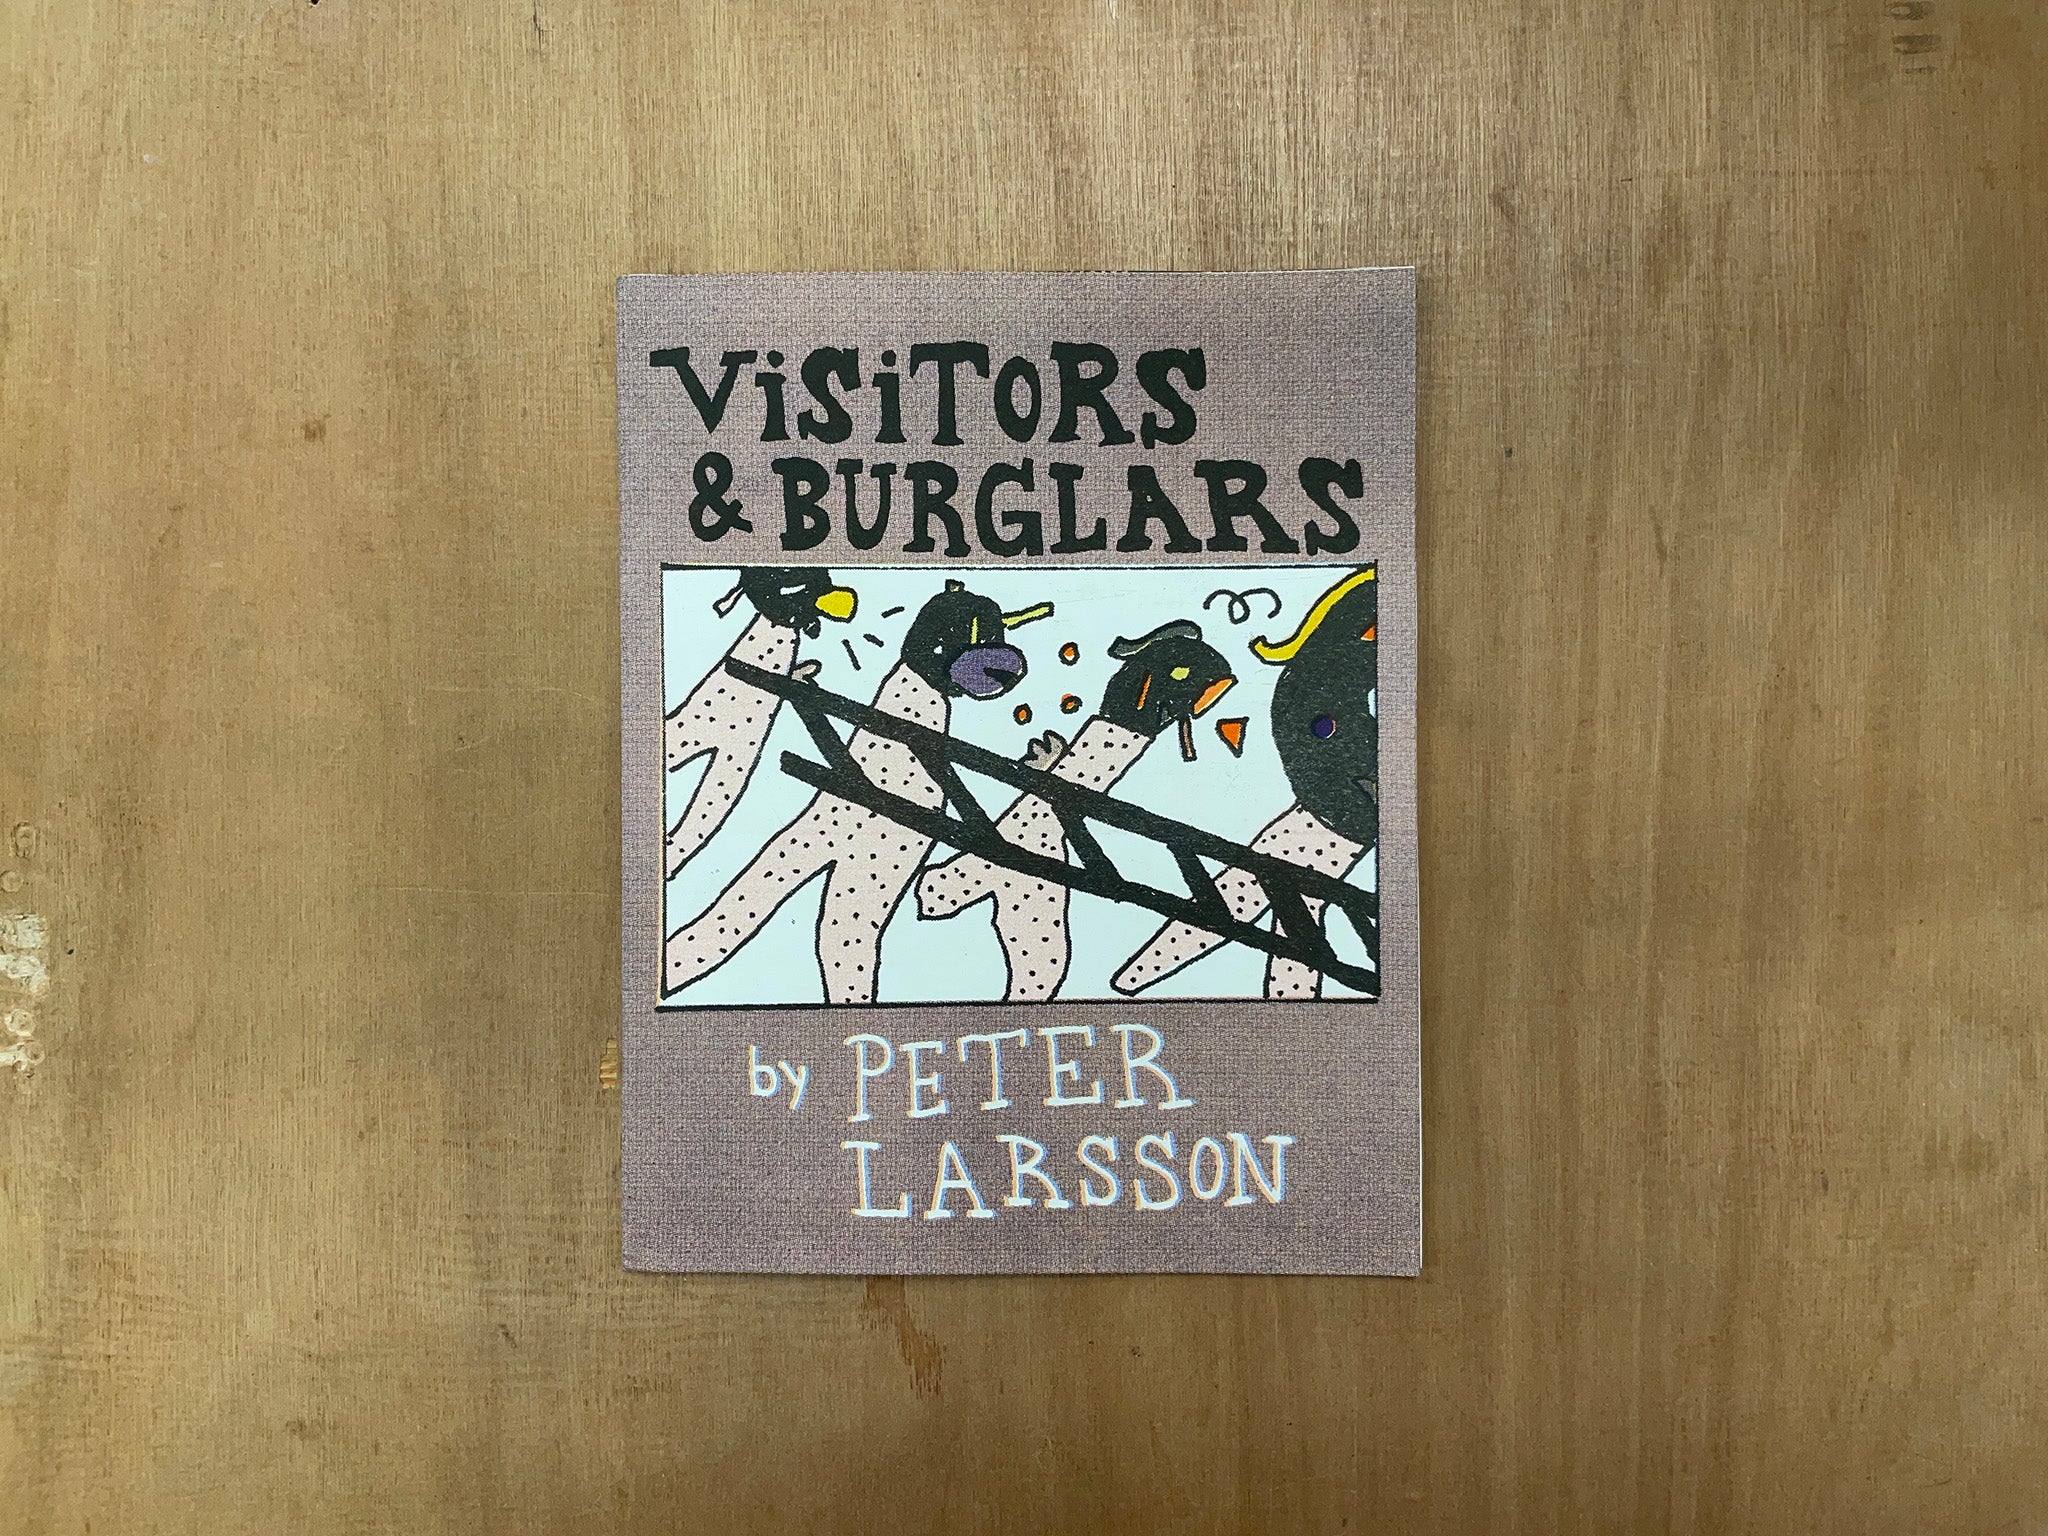 VISITORS & BURGLARS by Peter Larsson